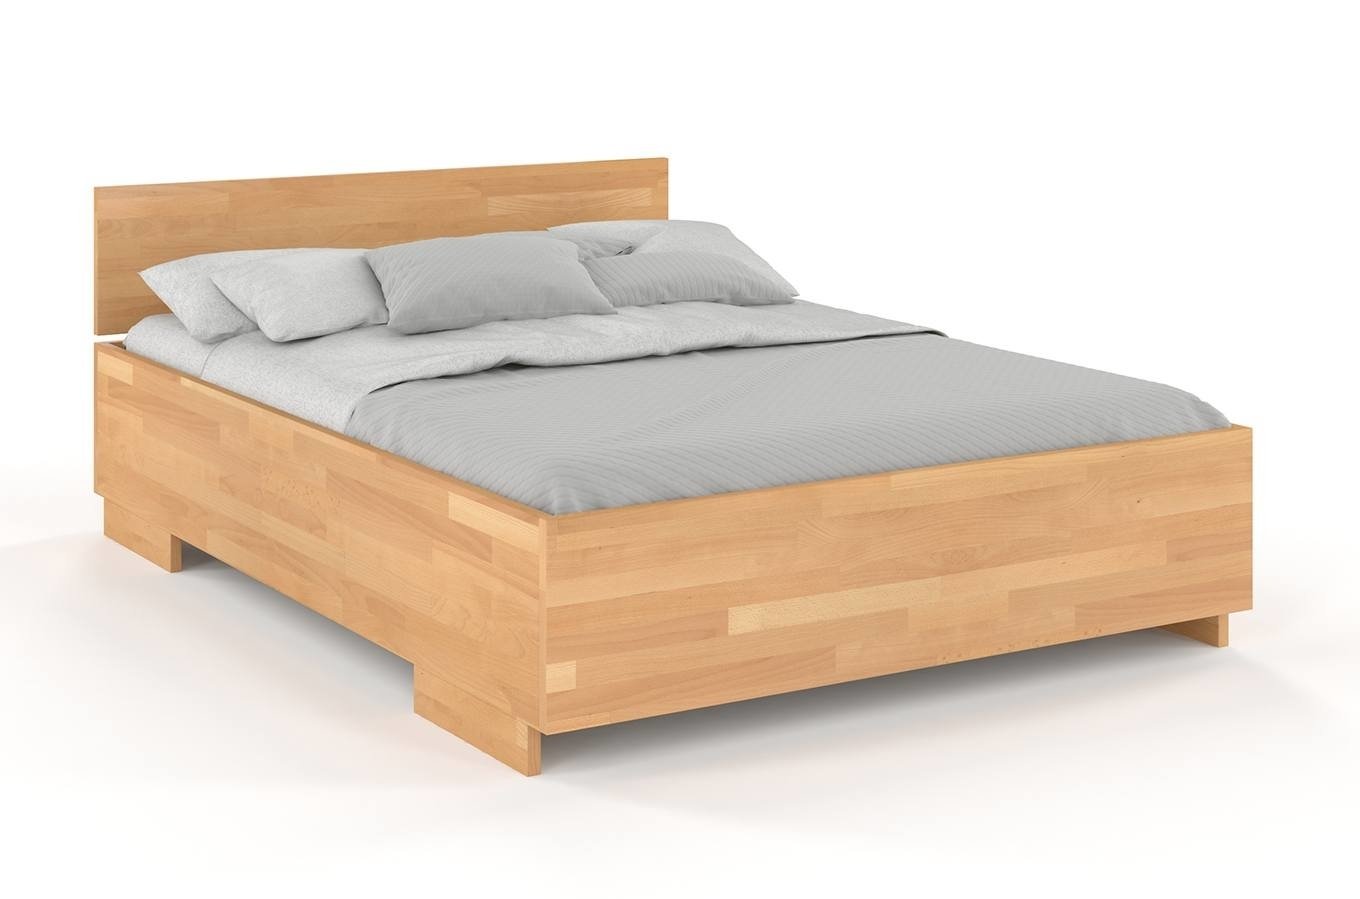 Łóżko drewniane bukowe Visby Bergman High&Long / 120x220 cm, kolor naturalny